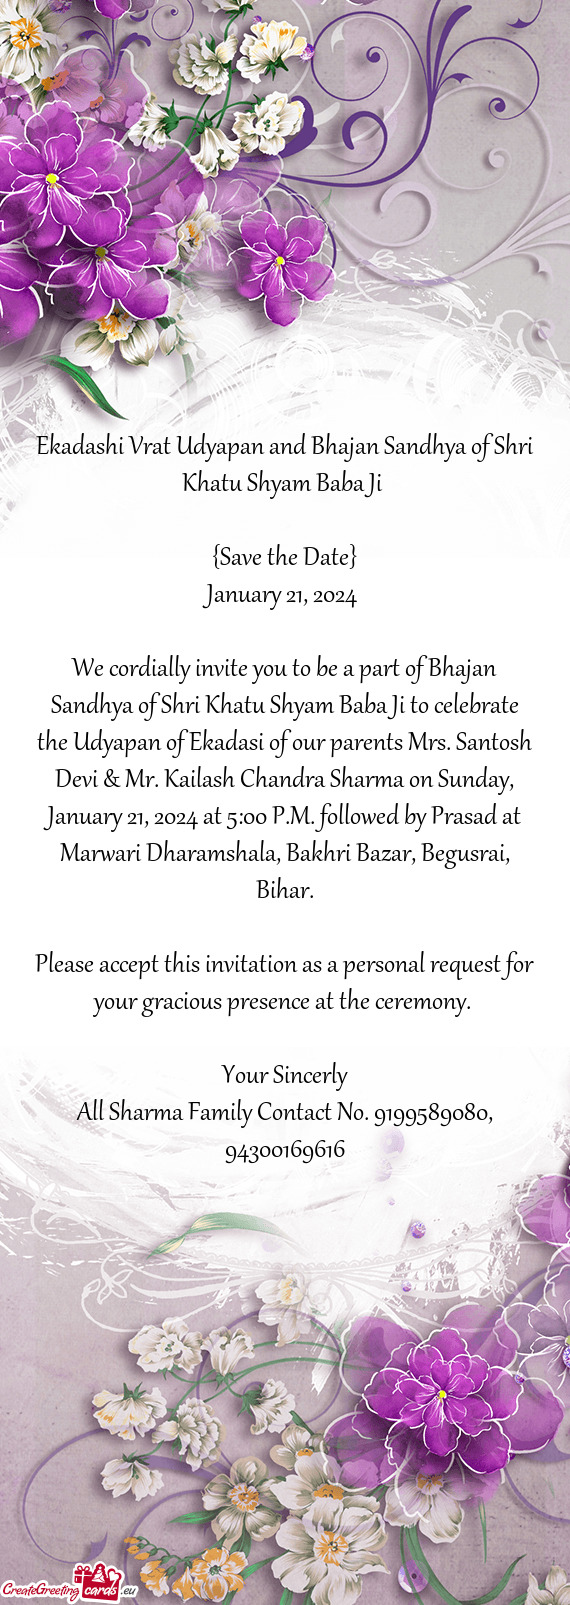 We cordially invite you to be a part of Bhajan Sandhya of Shri Khatu Shyam Baba Ji to celebrate the